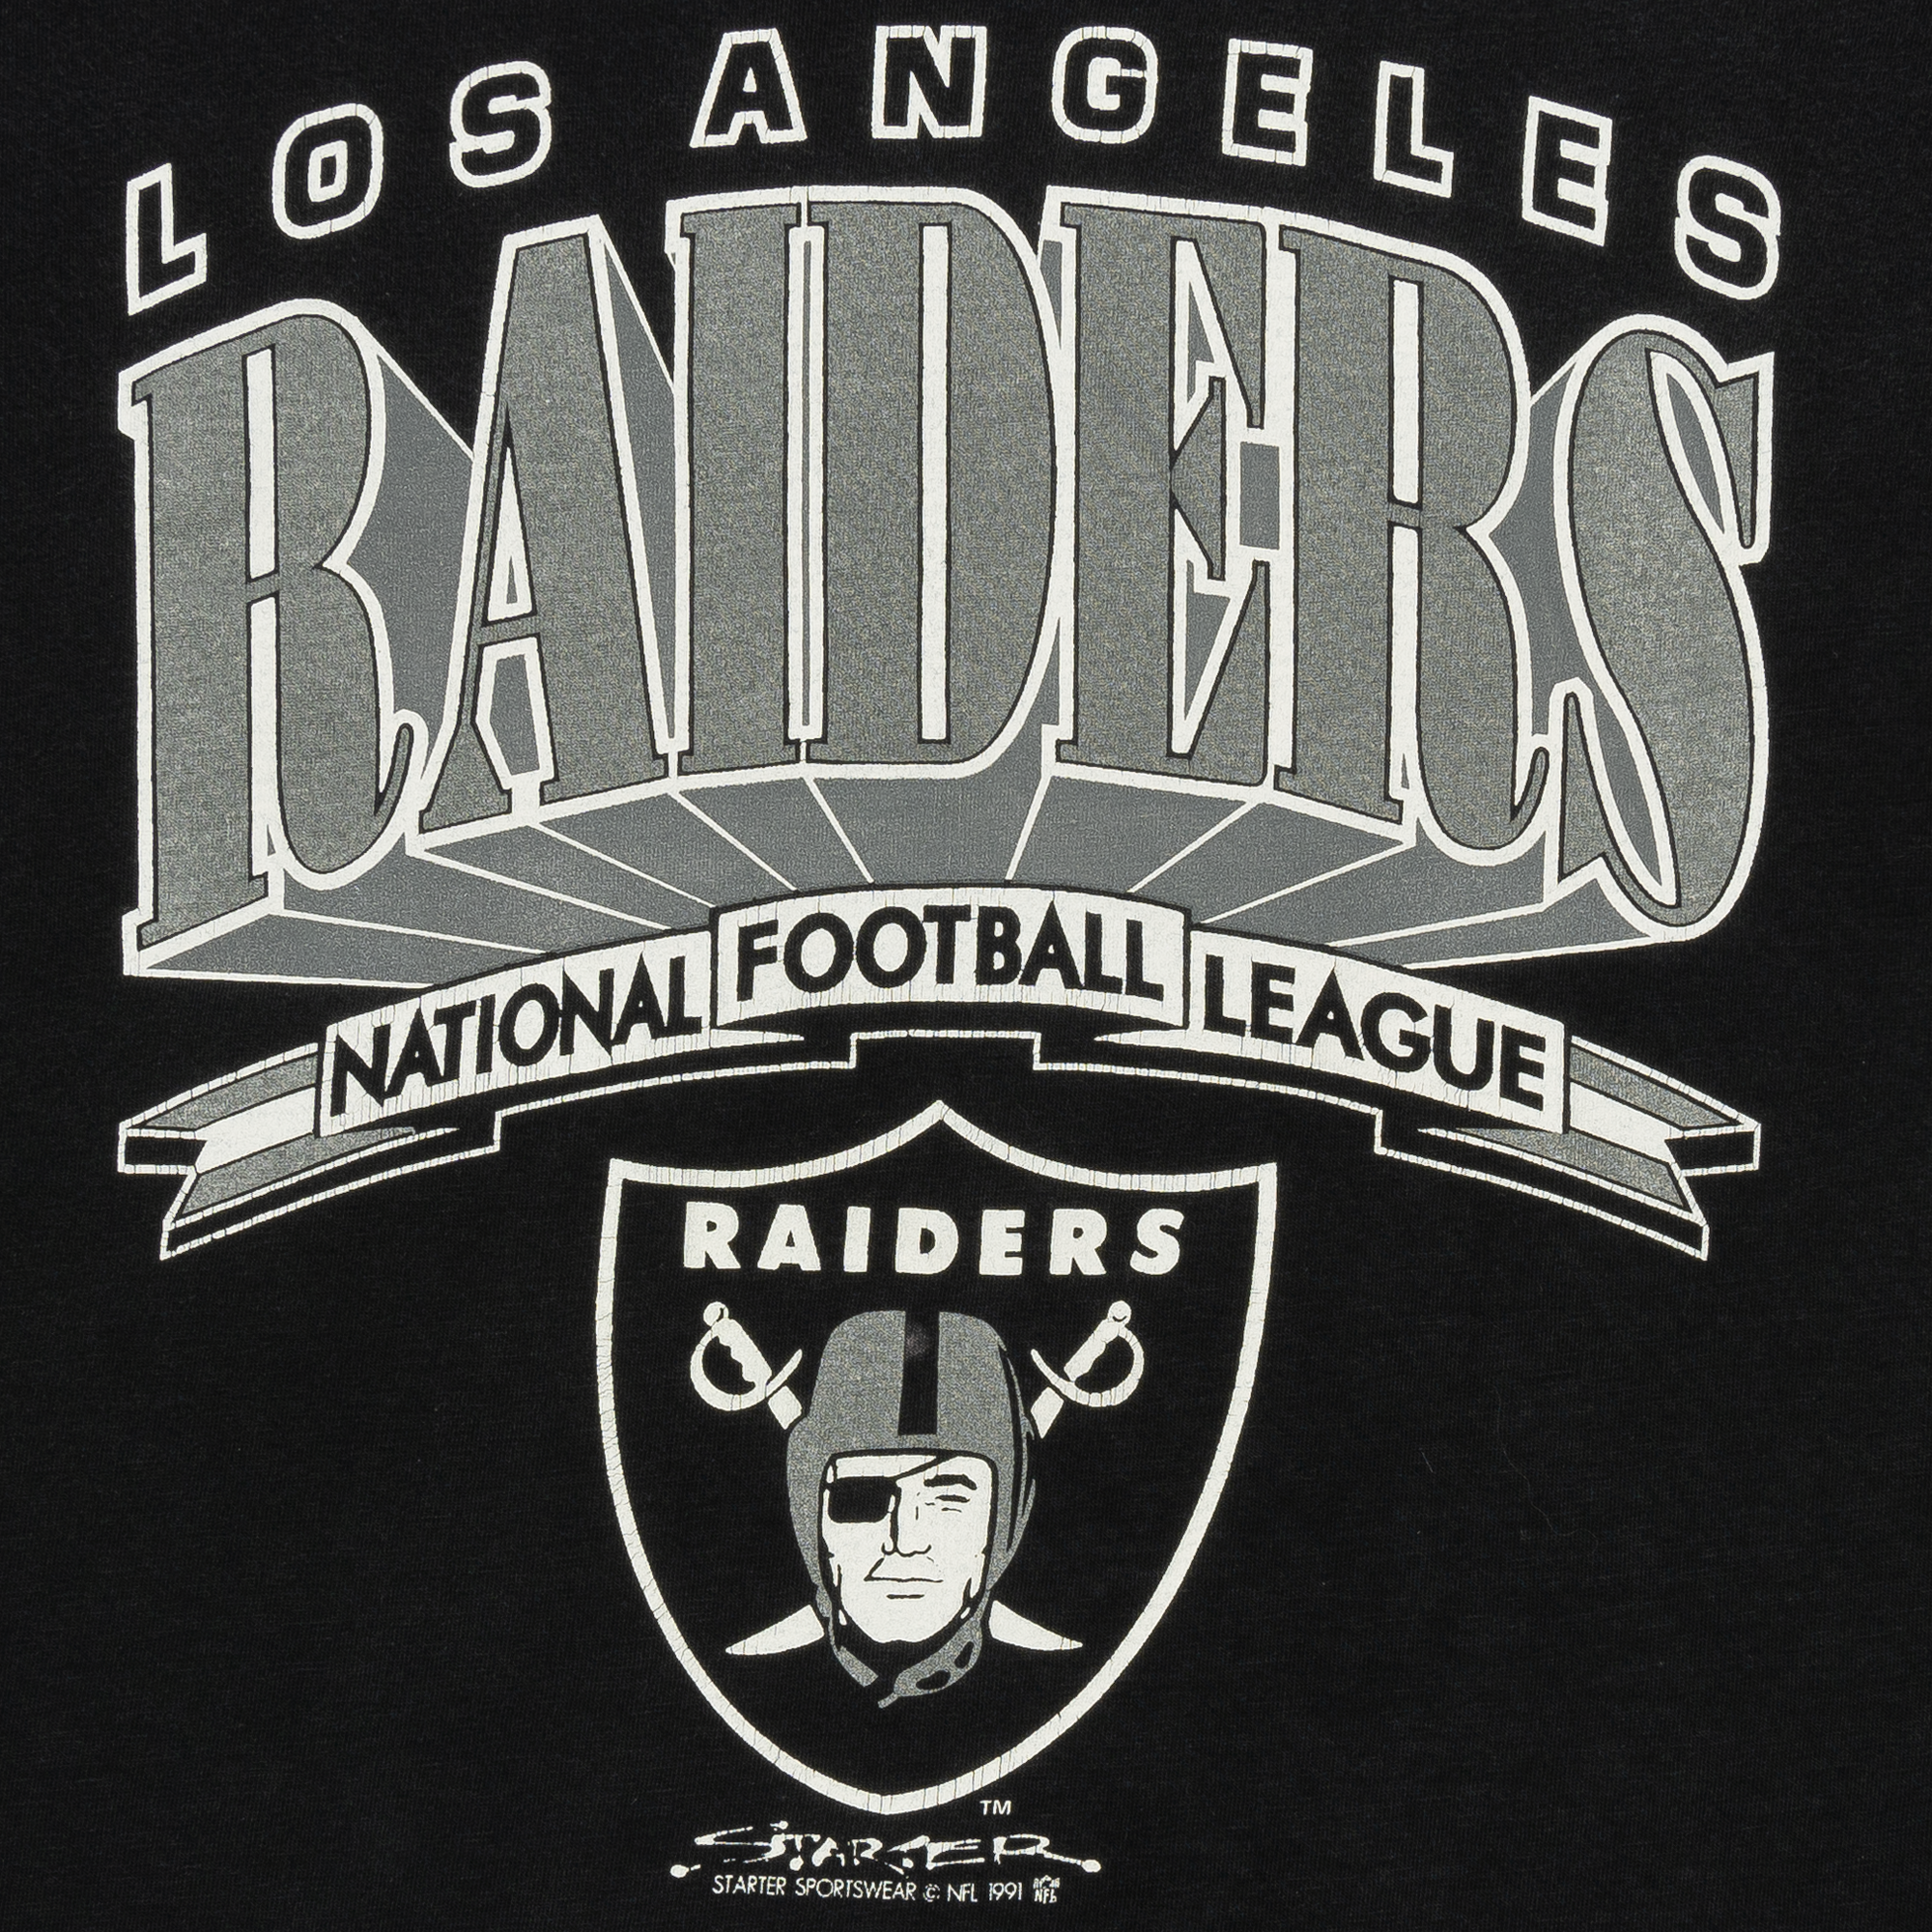 Los Angeles Raiders Logo Spellout Starter 1991 NFL Tee Black-PLUS